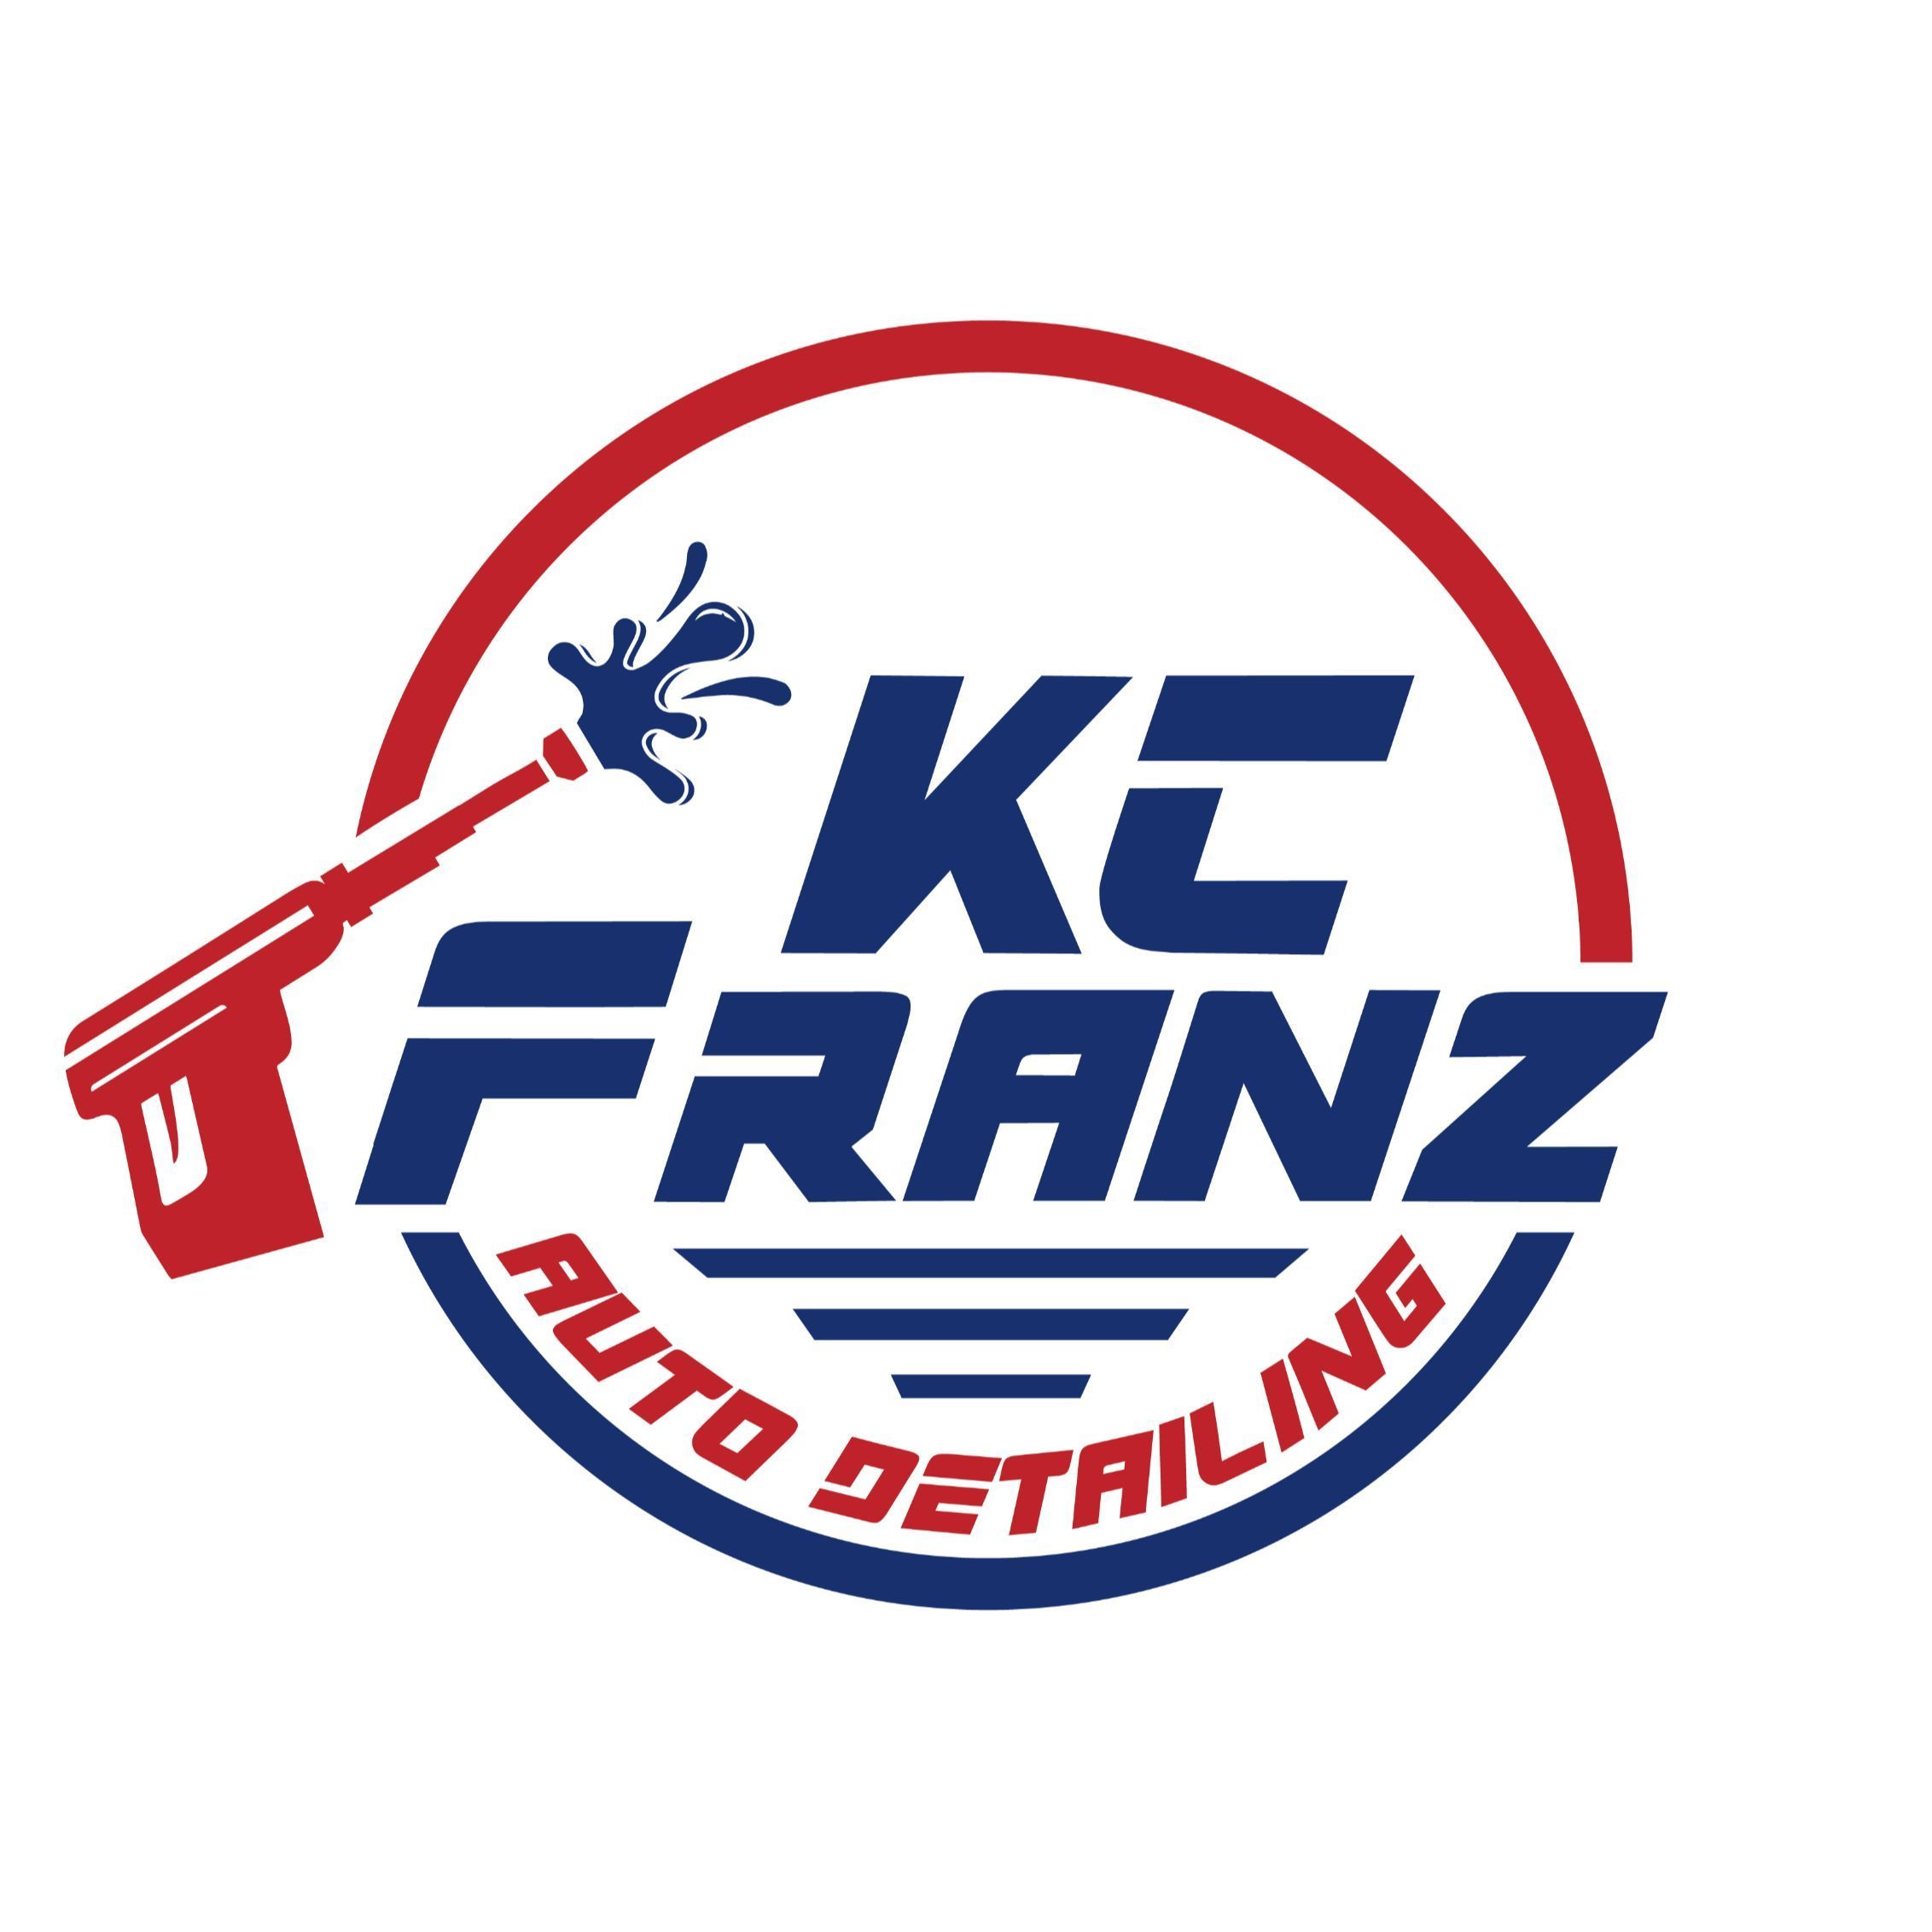 KCFranz Auto Detailing, San Antonio, 78216